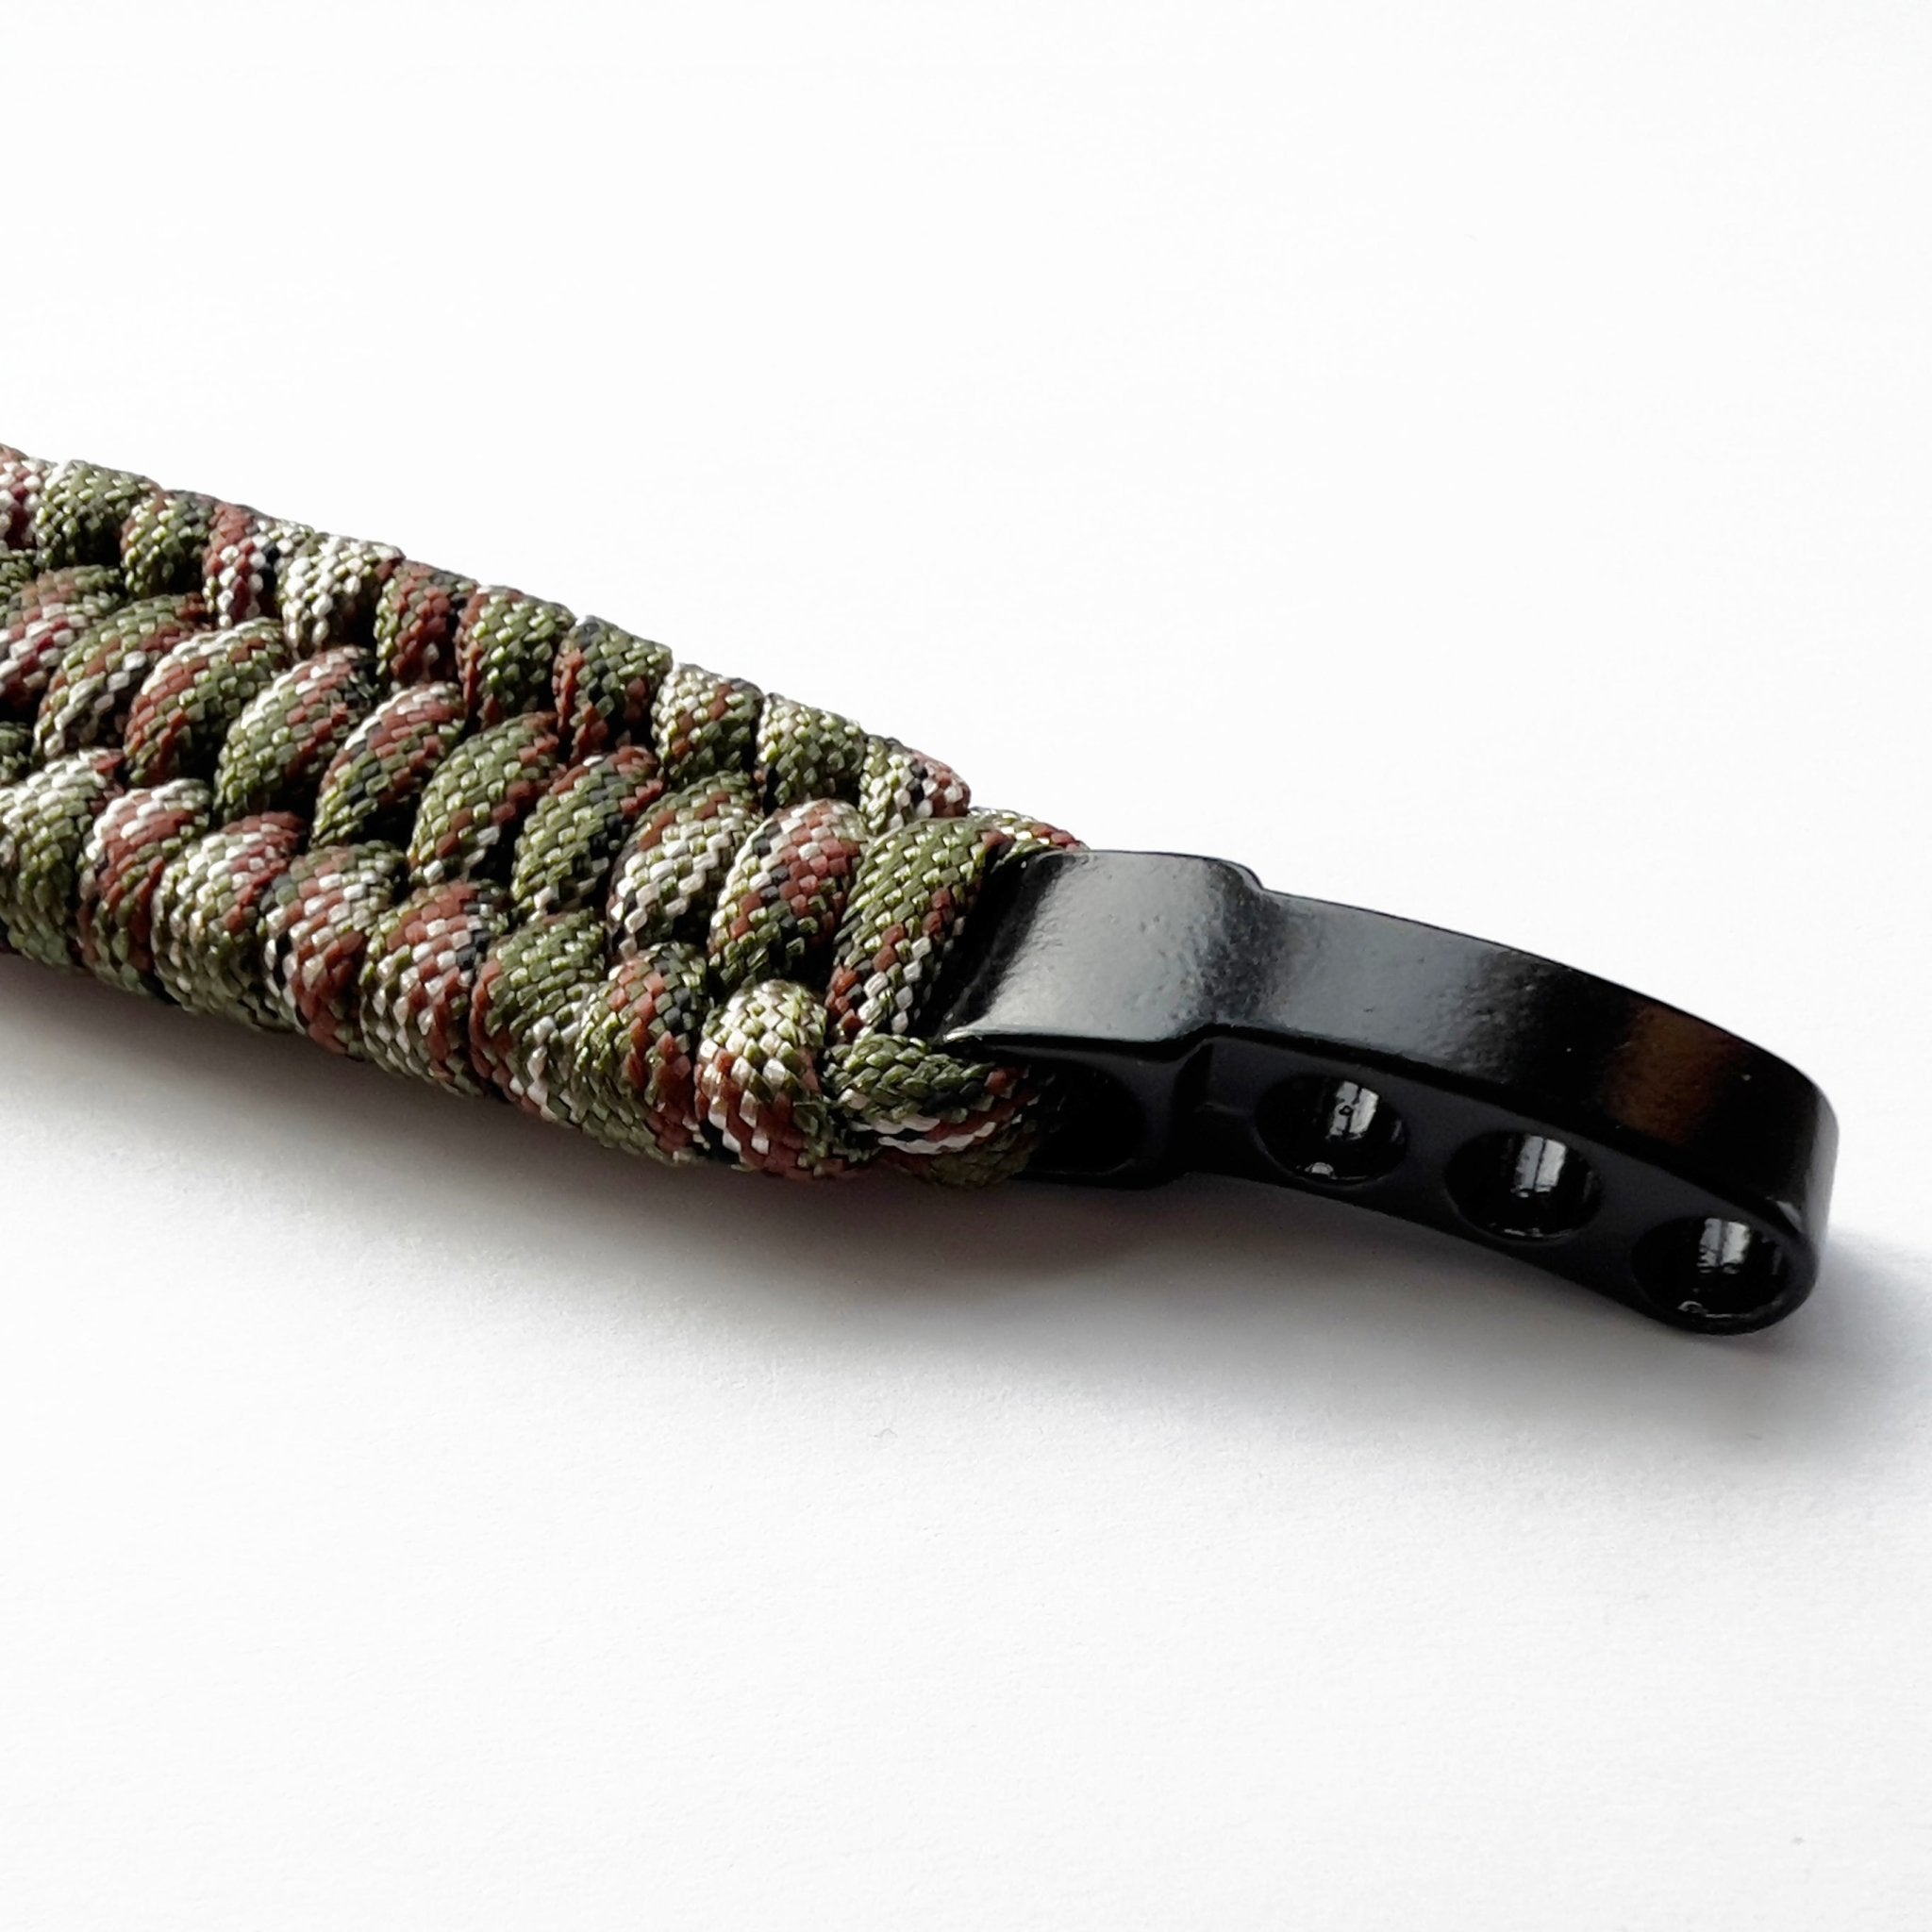 Paracord Bracelet in Camo - ONETURTLE